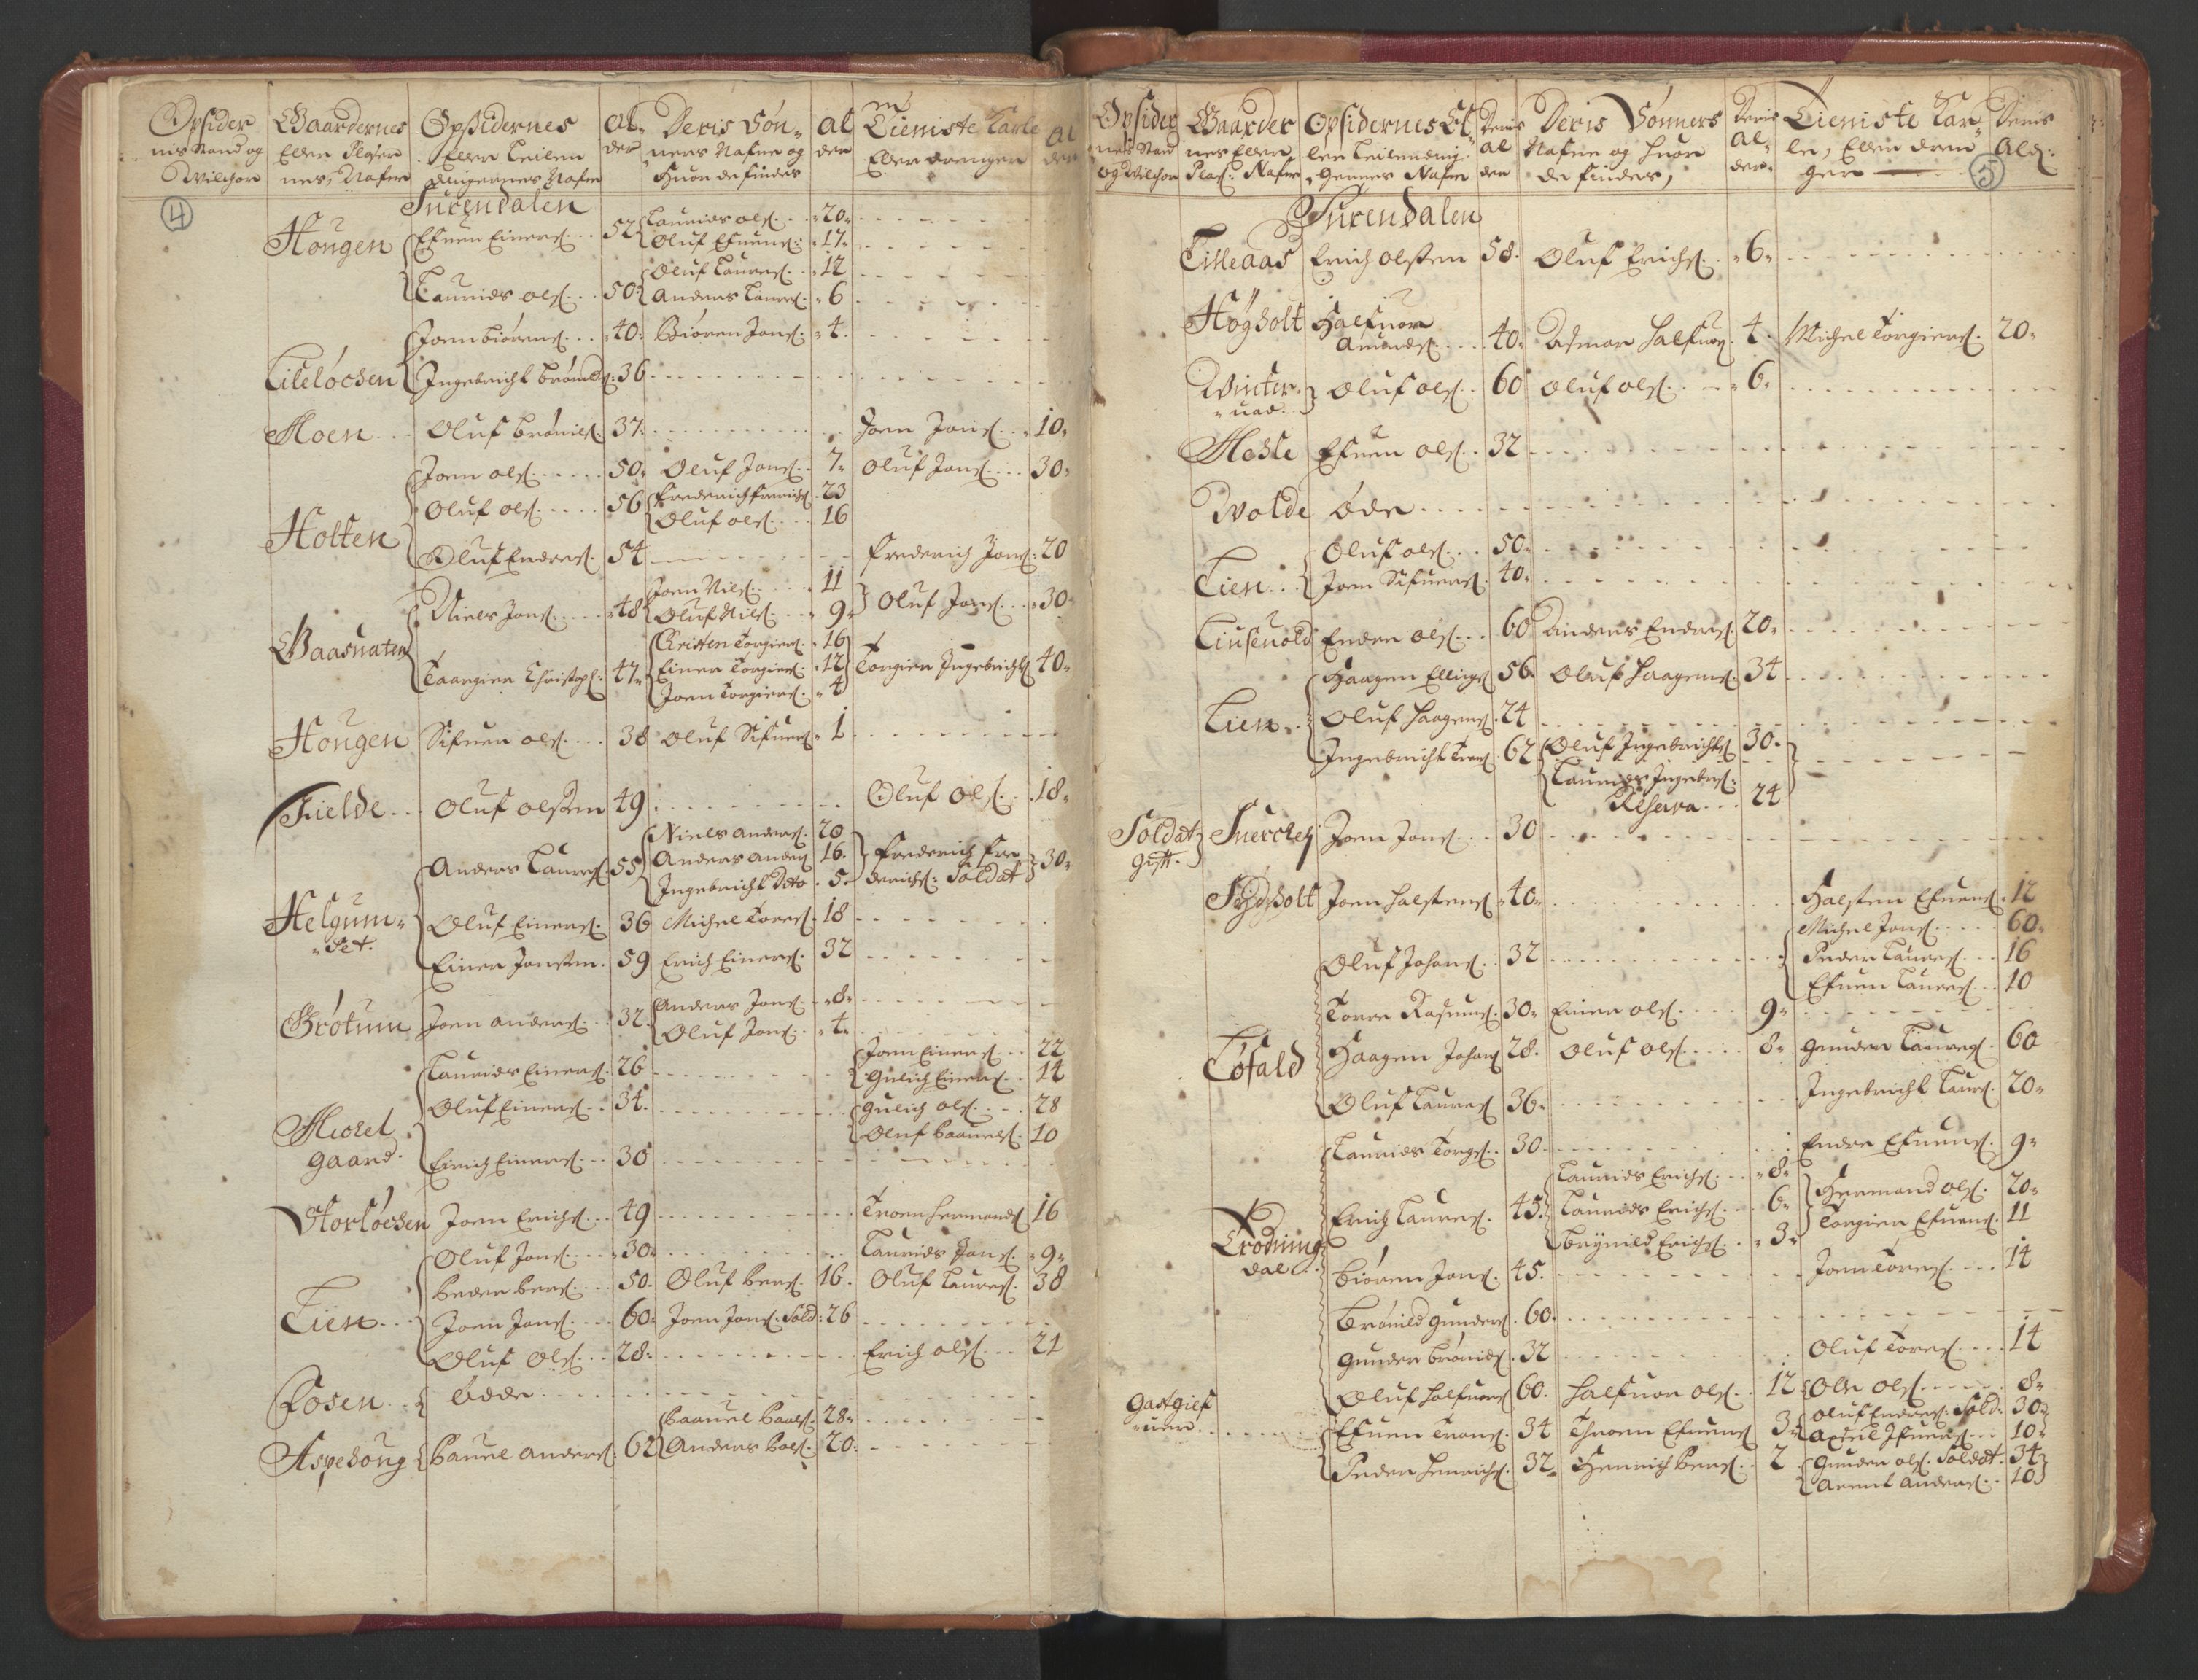 RA, Manntallet 1701, nr. 11: Nordmøre fogderi og Romsdal fogderi, 1701, s. 4-5